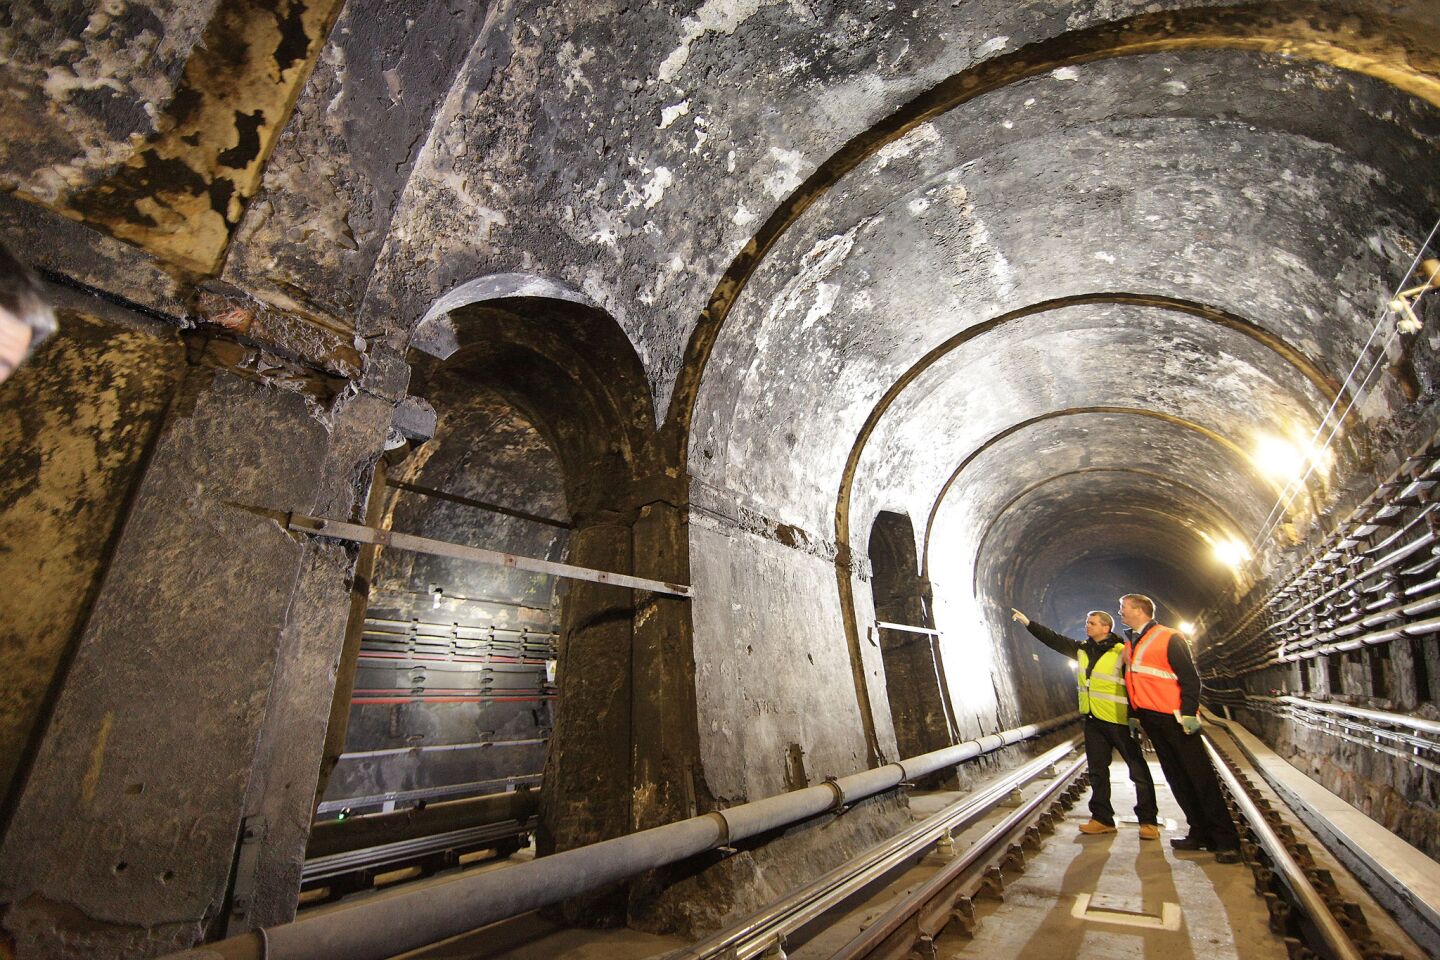 Railway workers look at original brickwork in the Thames Tunnel.